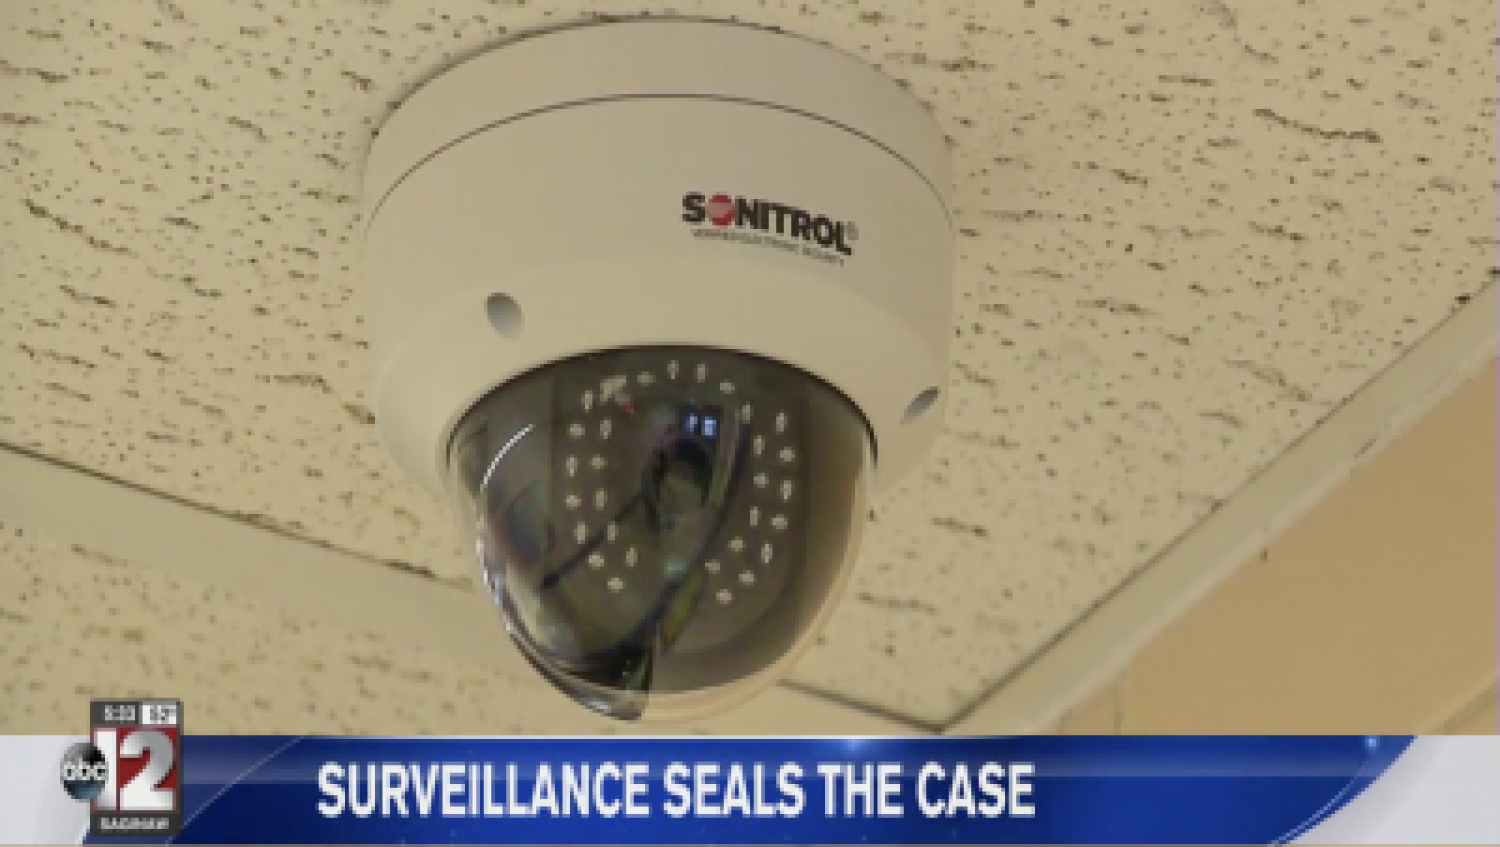 News broadcast of surveillance camera